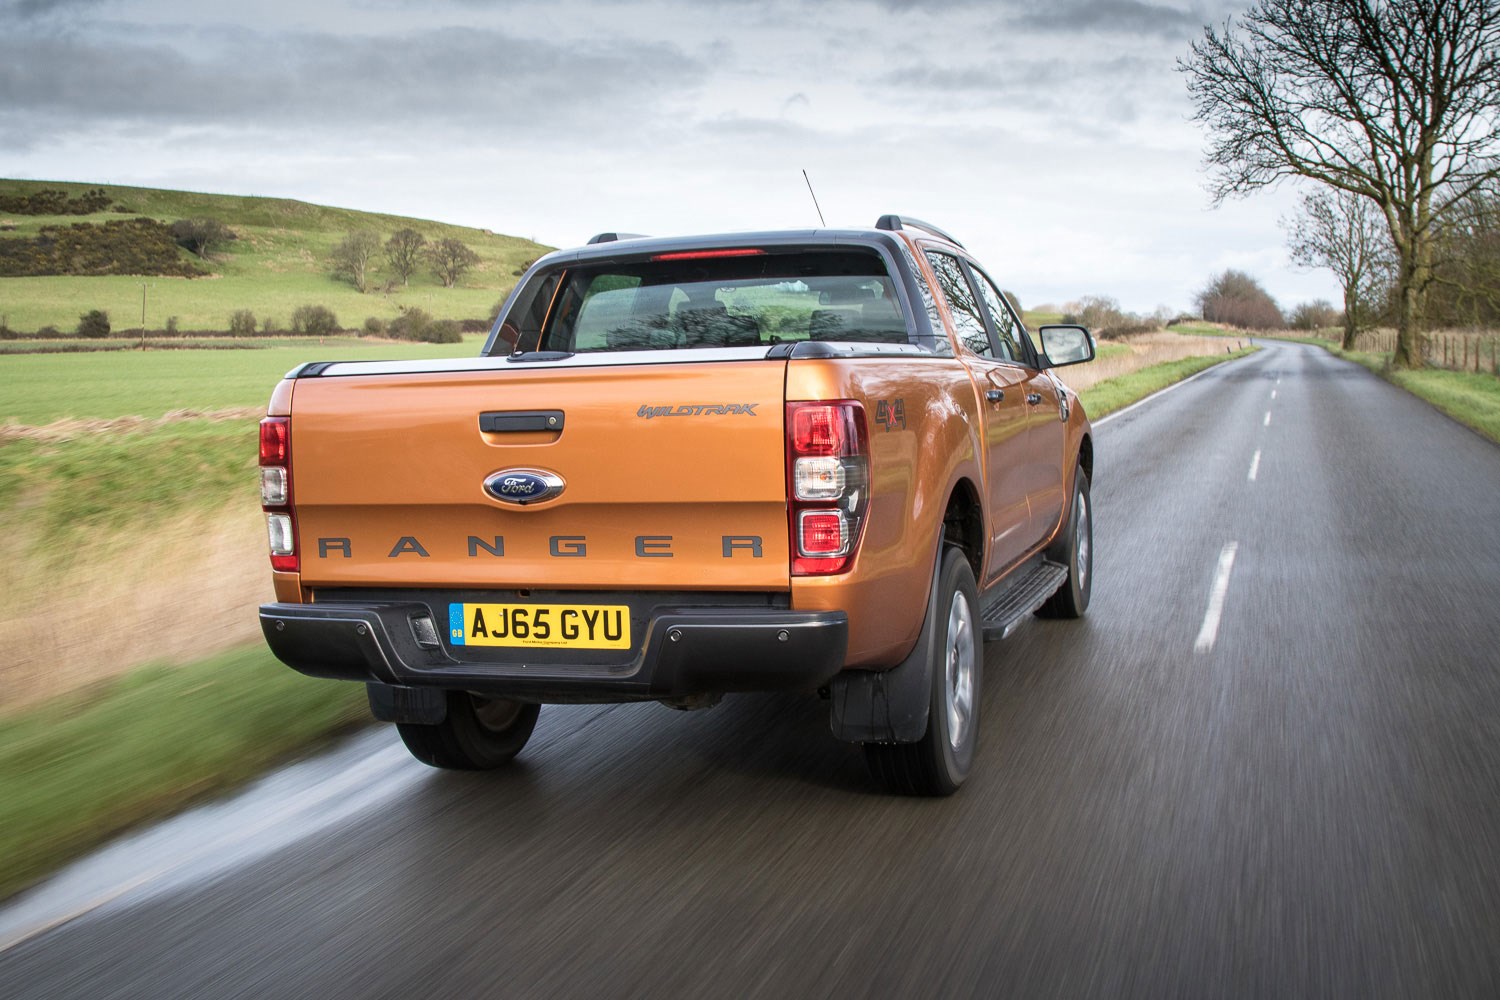 Ford Ranger review - 2016 facelift, rear view, driving, orange Wildtrak